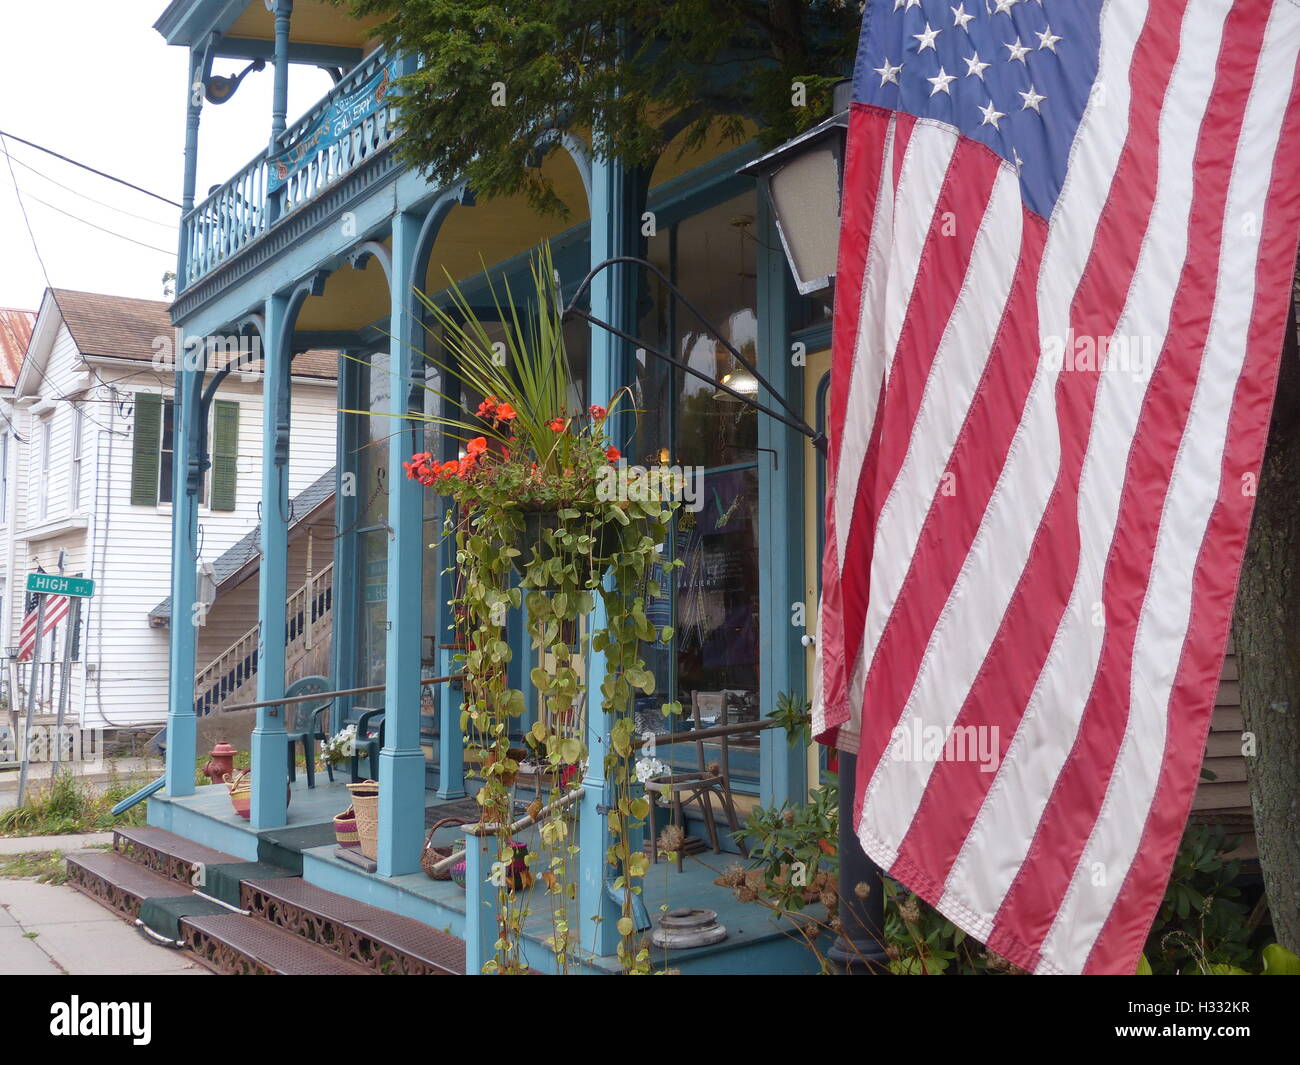 Andes, NY. US flag flies on Main Street Stock Photo